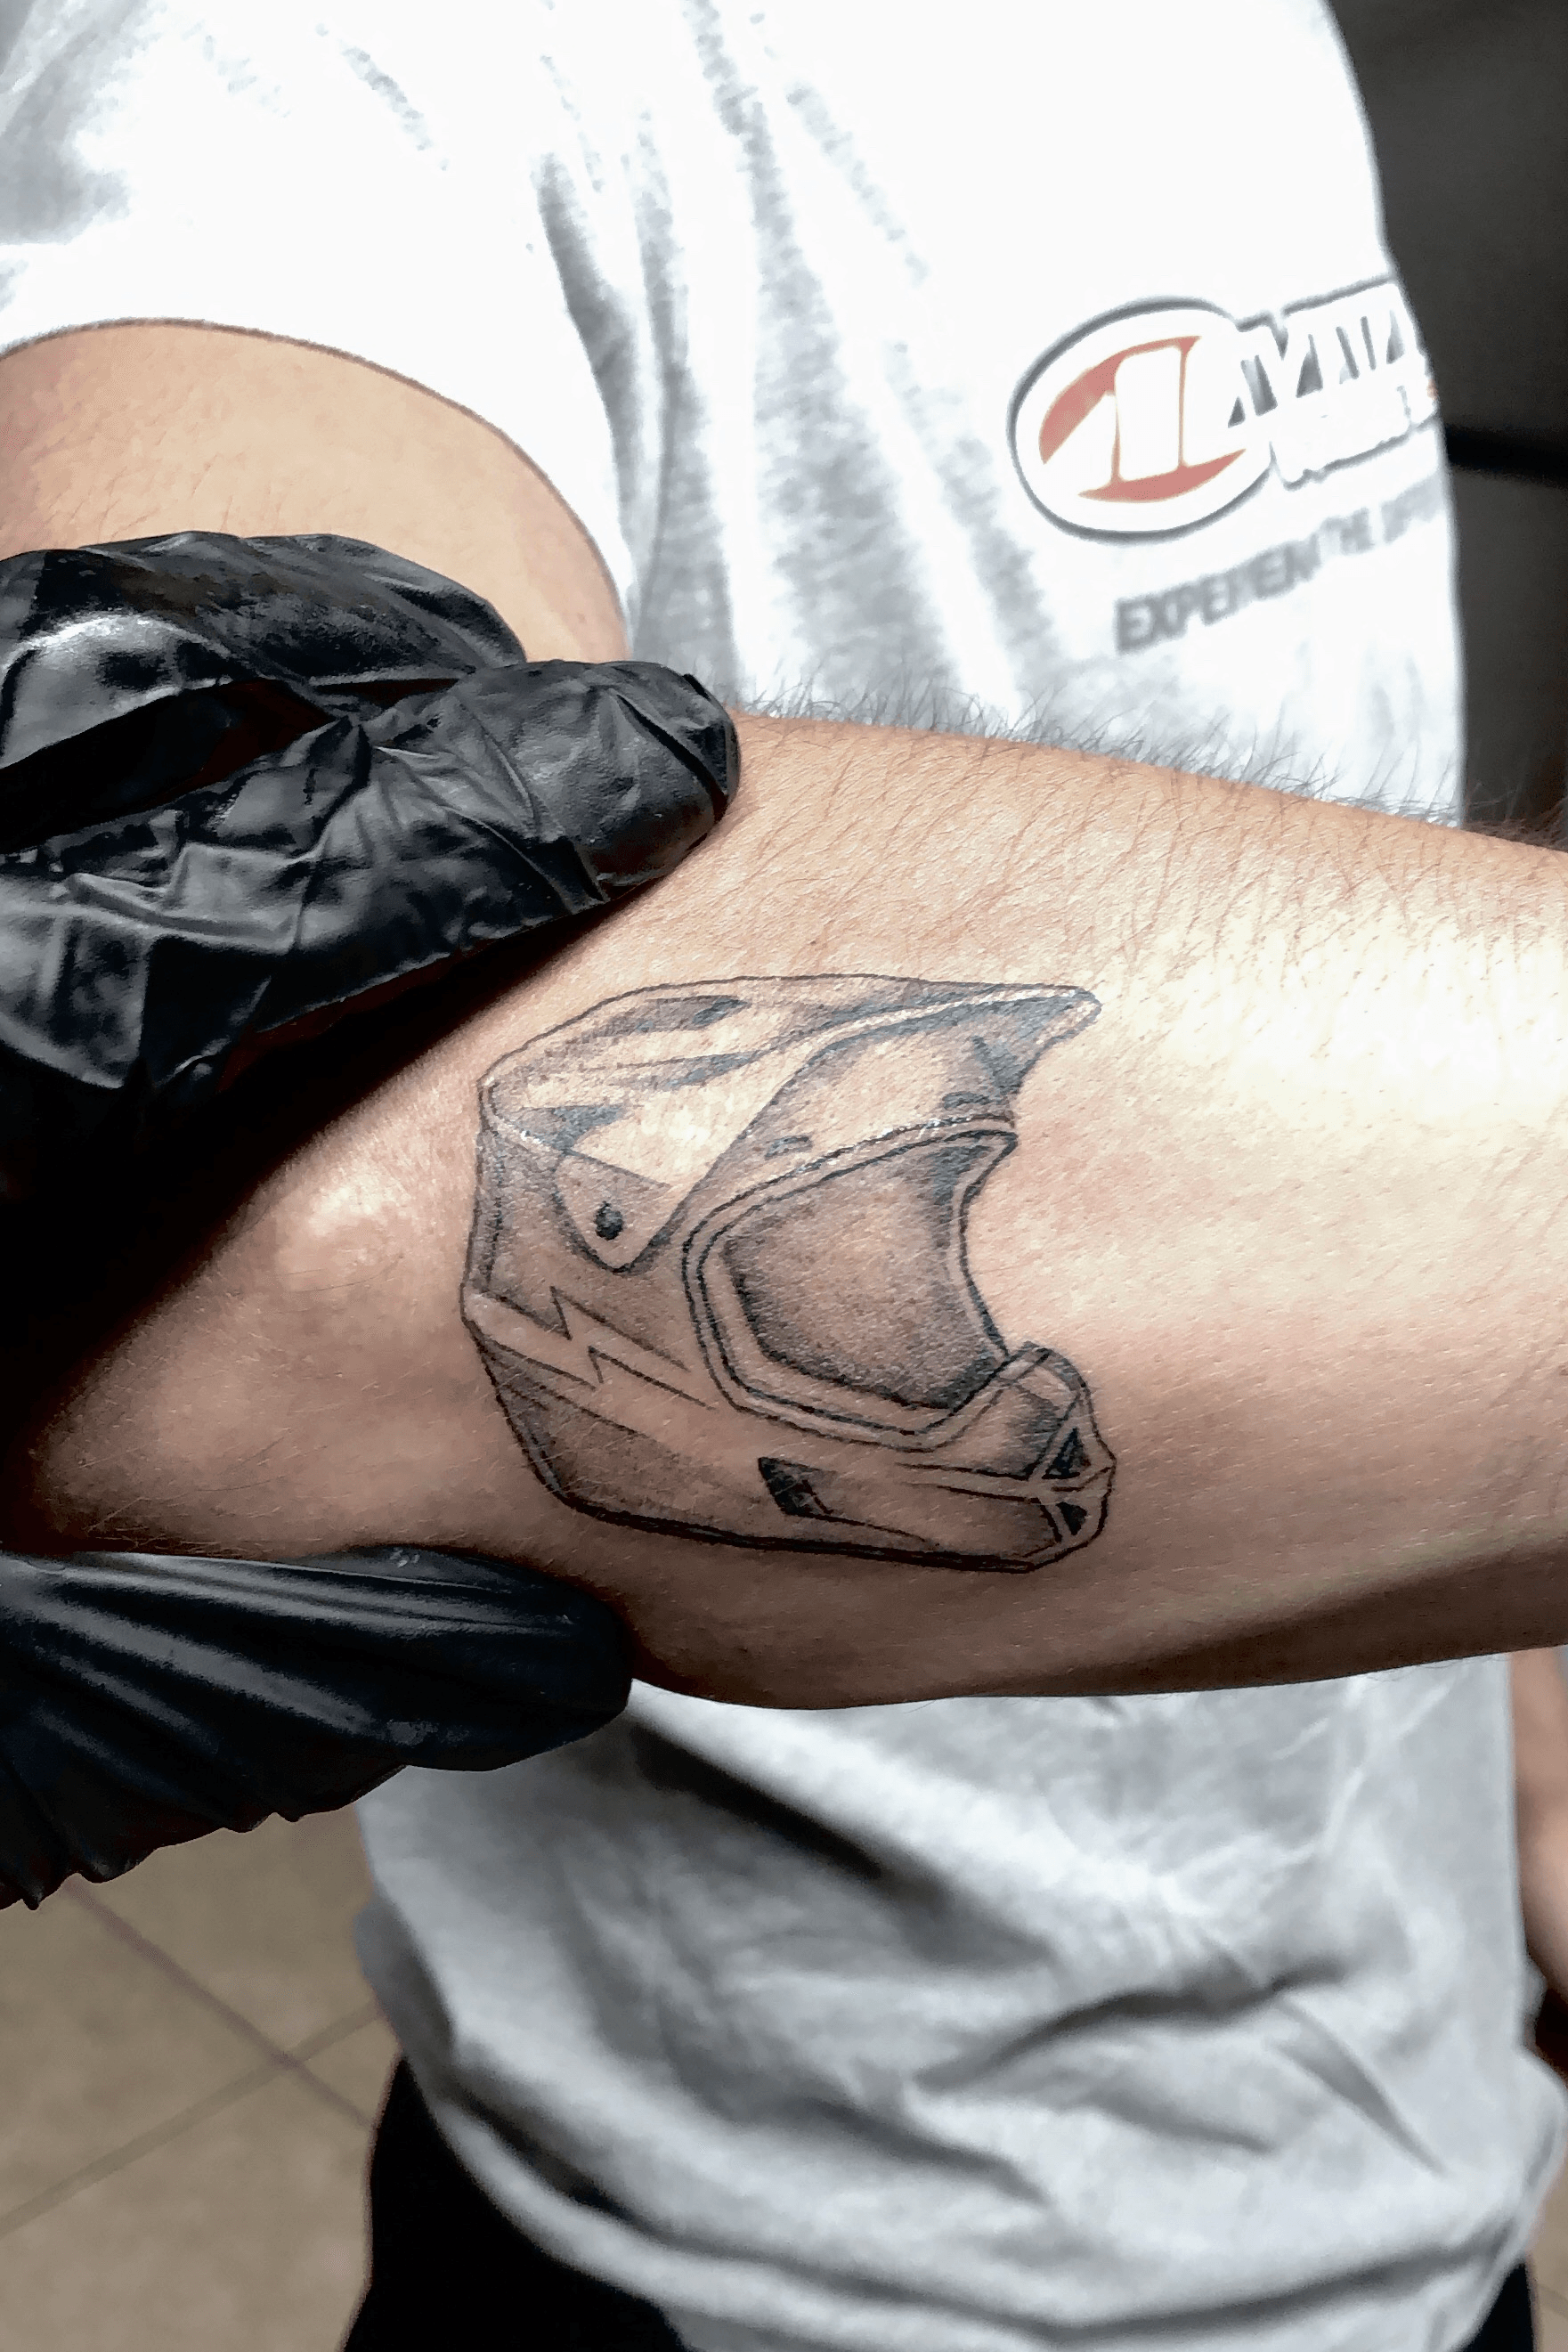 inkedin ScalpMicro  Tattoos on X  𝗕𝗶𝗸𝗲𝗿 𝗛𝗲𝗹𝗺𝗲𝘁  Thanks  Tyler  𝗕𝗶𝗸𝗲𝗿 𝗛𝗲𝗹𝗺𝗲𝘁 𝗯𝘆 derricktattoos 𝗙𝗼𝗿  𝗕𝗼𝗼𝗸𝗶𝗻𝗴𝘀 𝟬𝟭𝟰𝟭 𝟱𝟱𝟯𝟱𝟴𝟵𝟵 biker bikingbrotherhood  motorbike tattooedguys inkedguys 